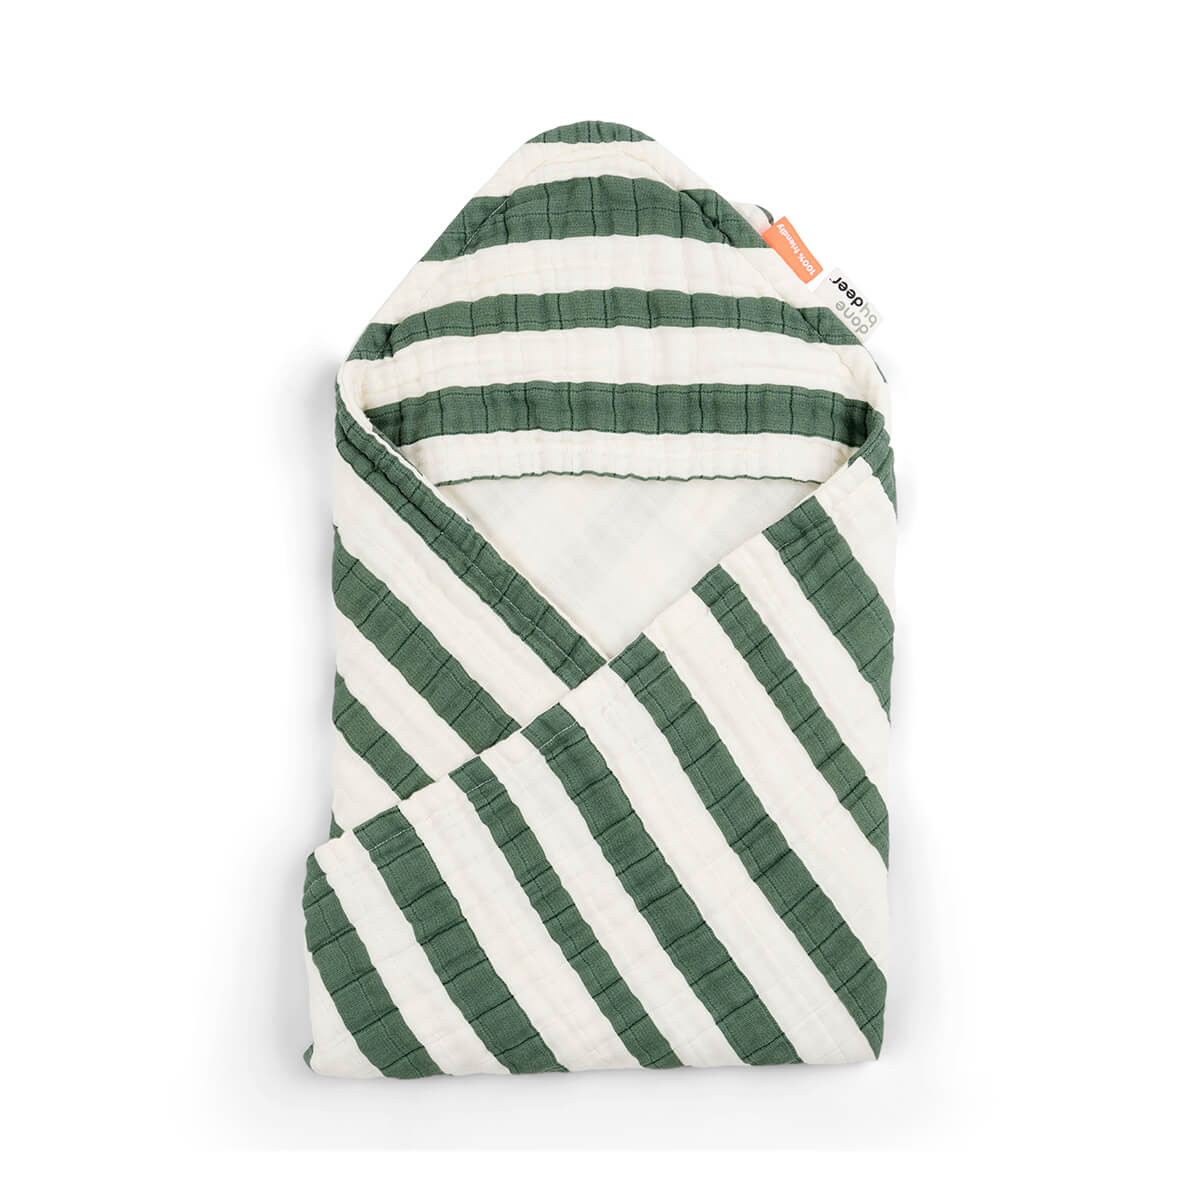 Hooded towel - Stripes - Green